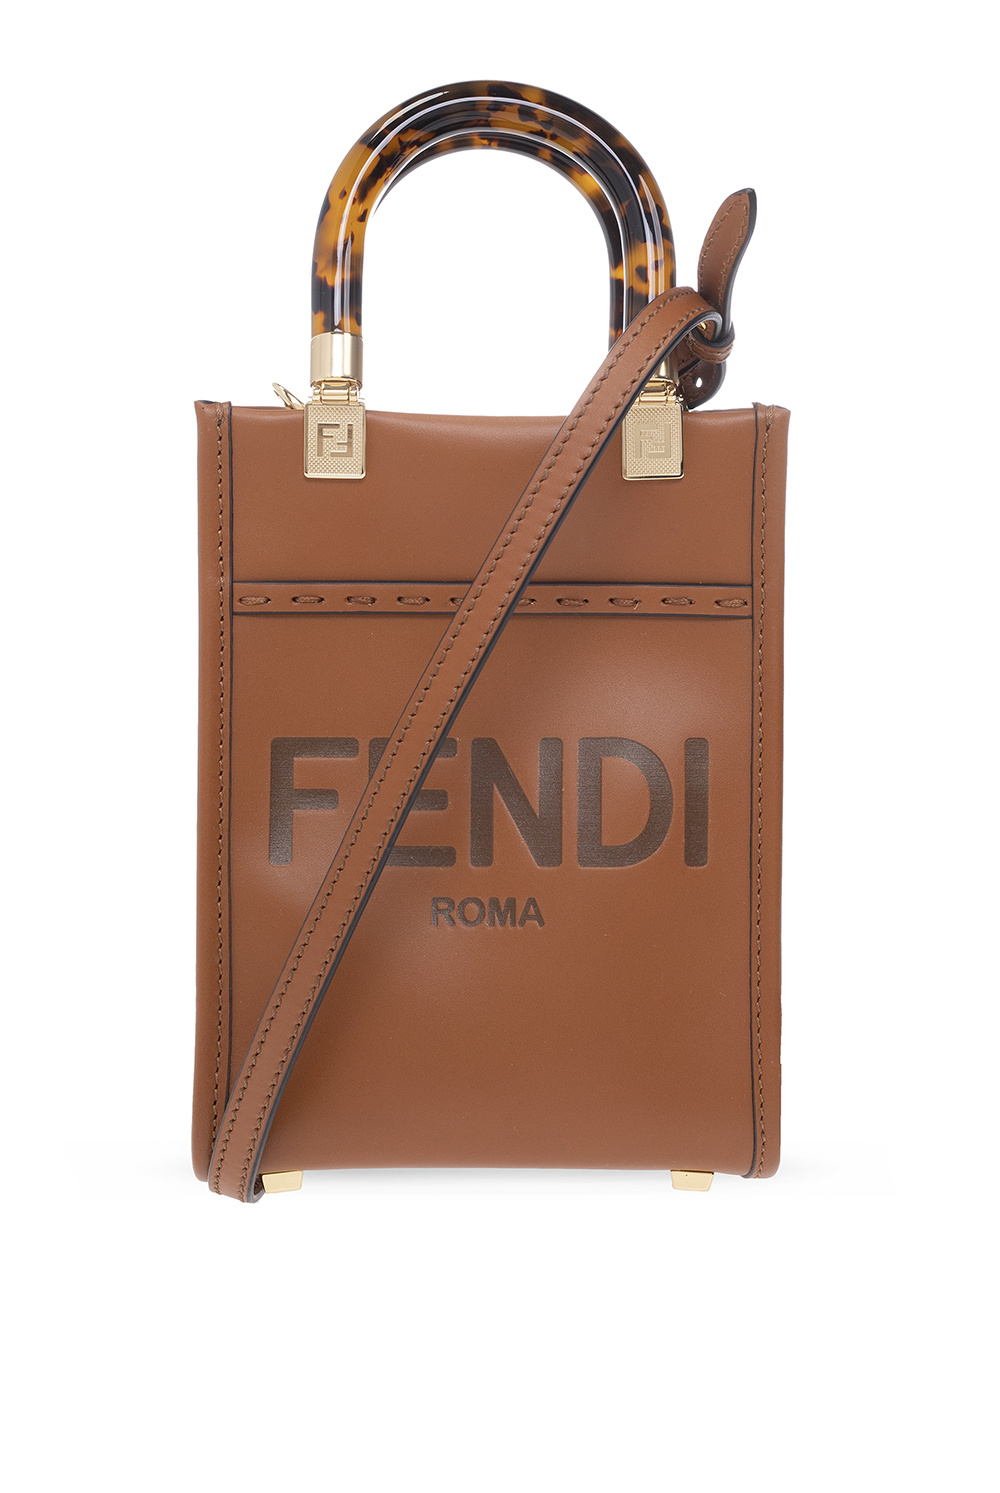 Pouches  Fendi Mens Two-Tone Leather Fendi Roma Capsule Pouch